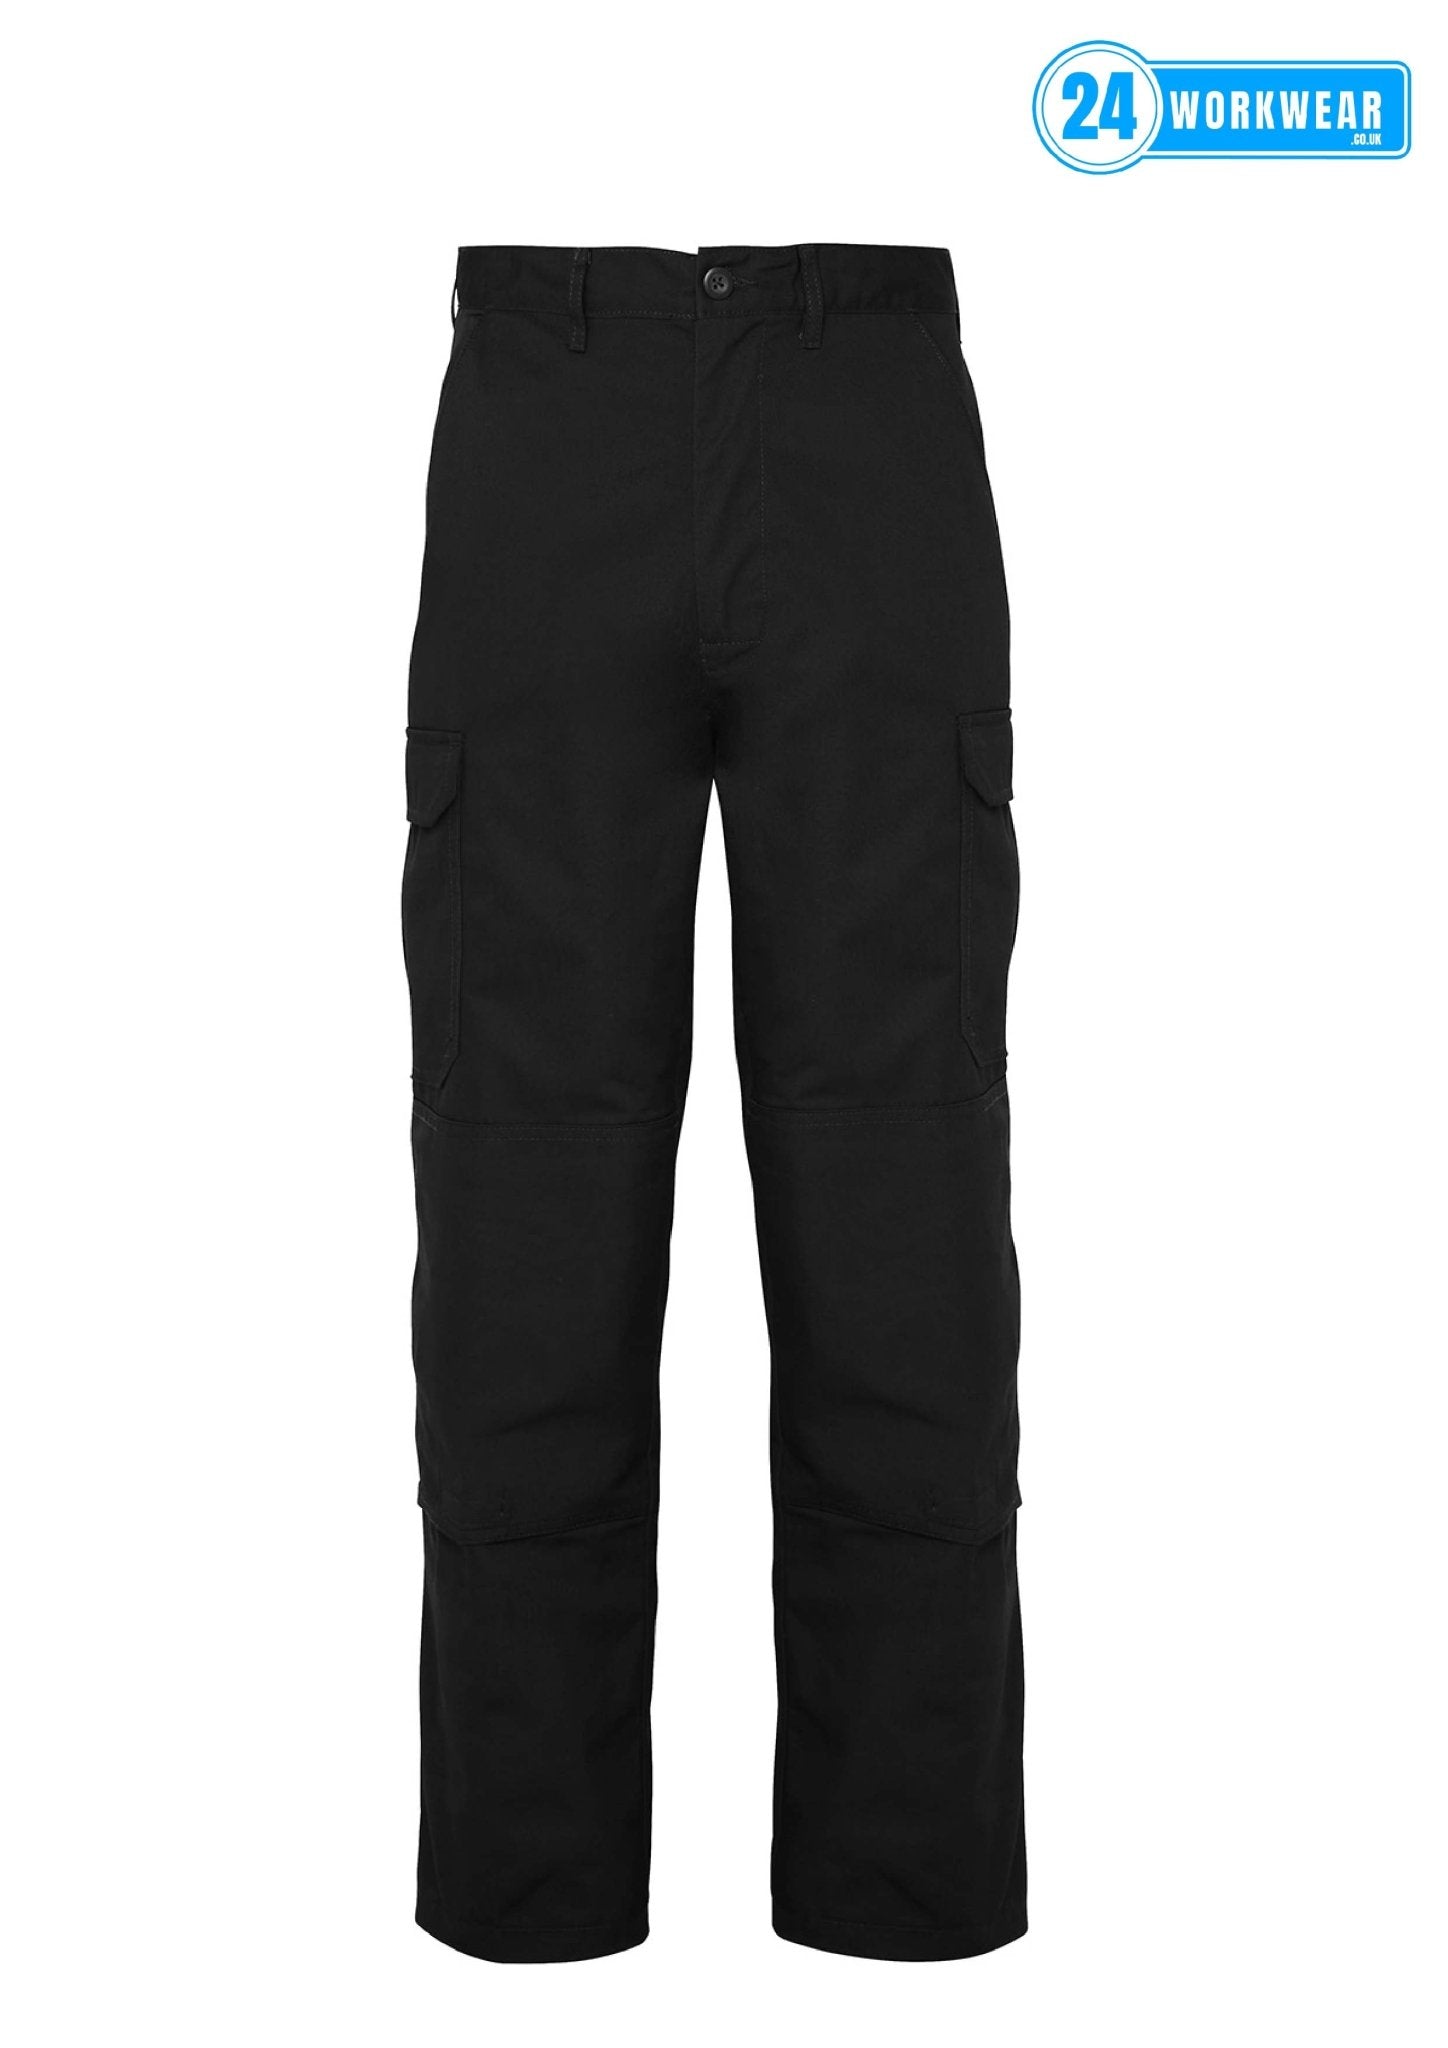 Pro RTX Tradesman Trousers - 24 Workwear -